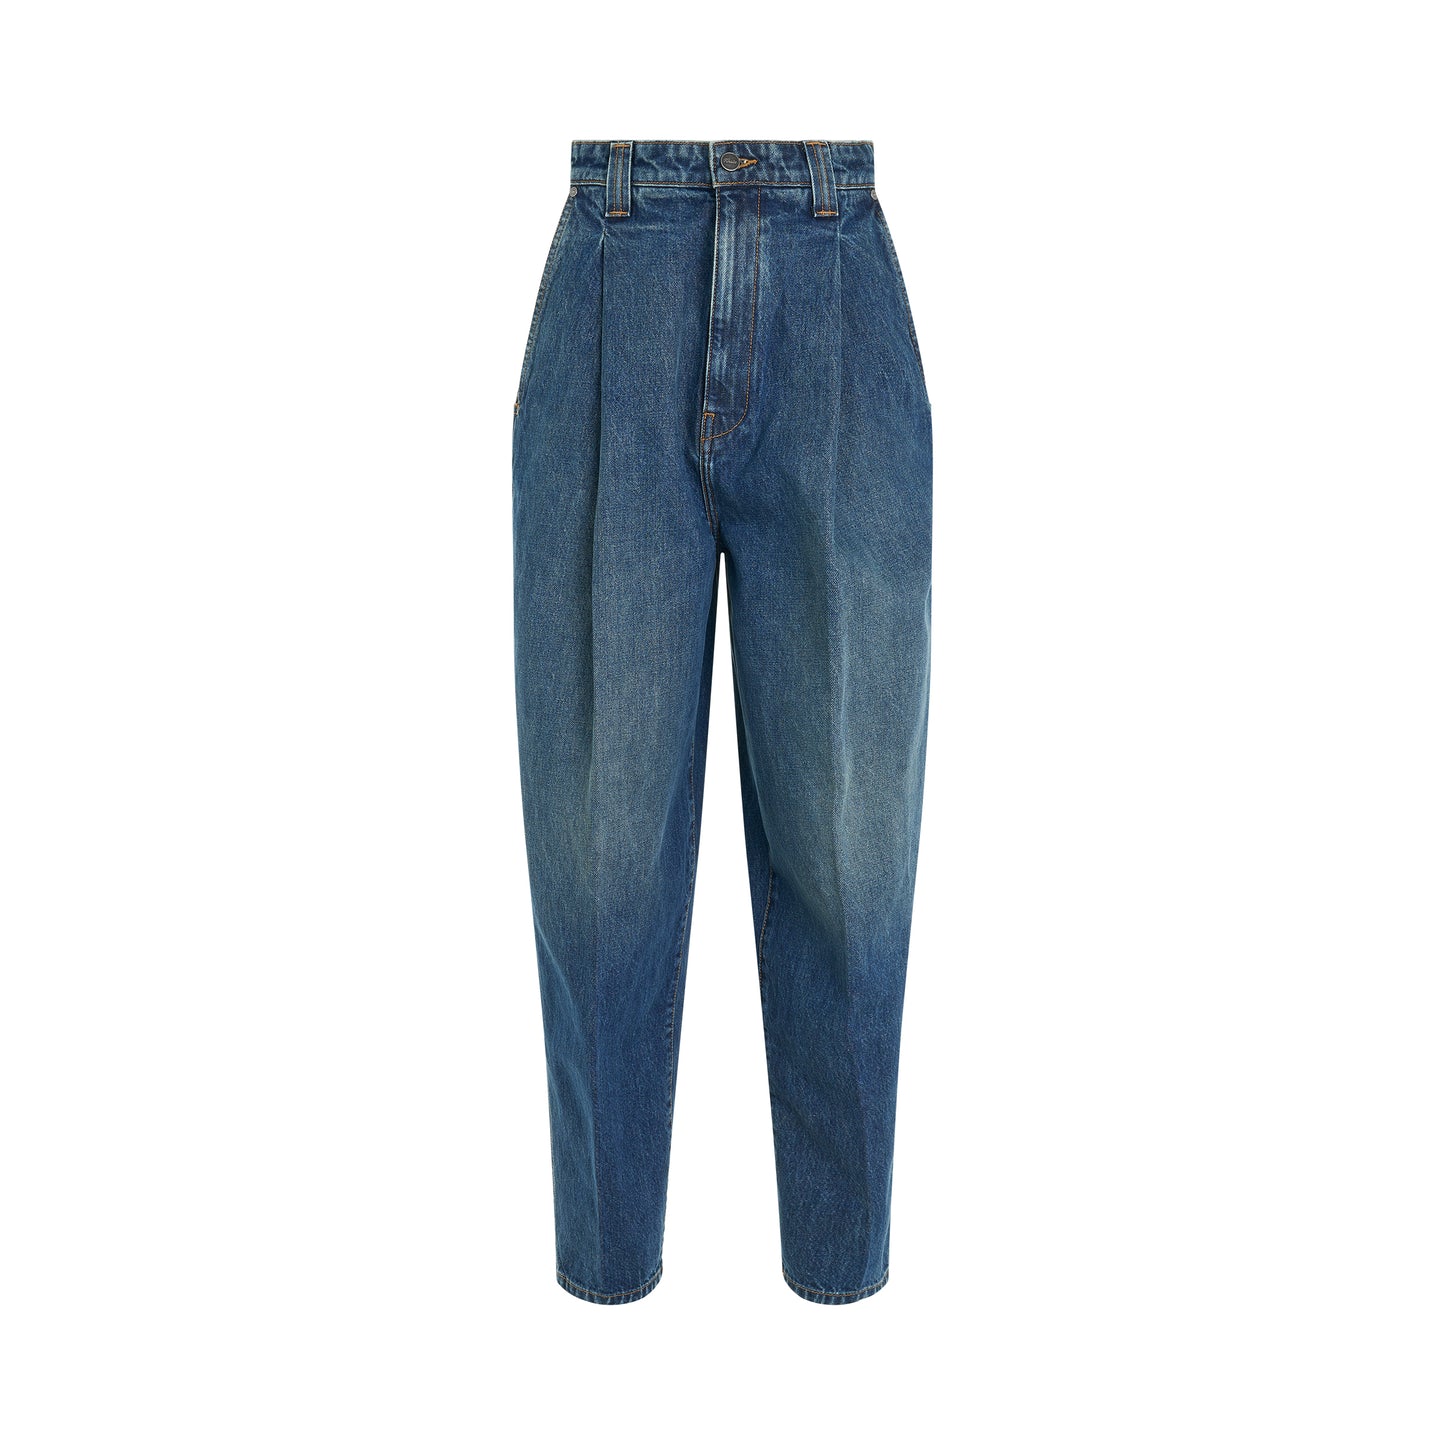 Ashford Jeans in Stinson